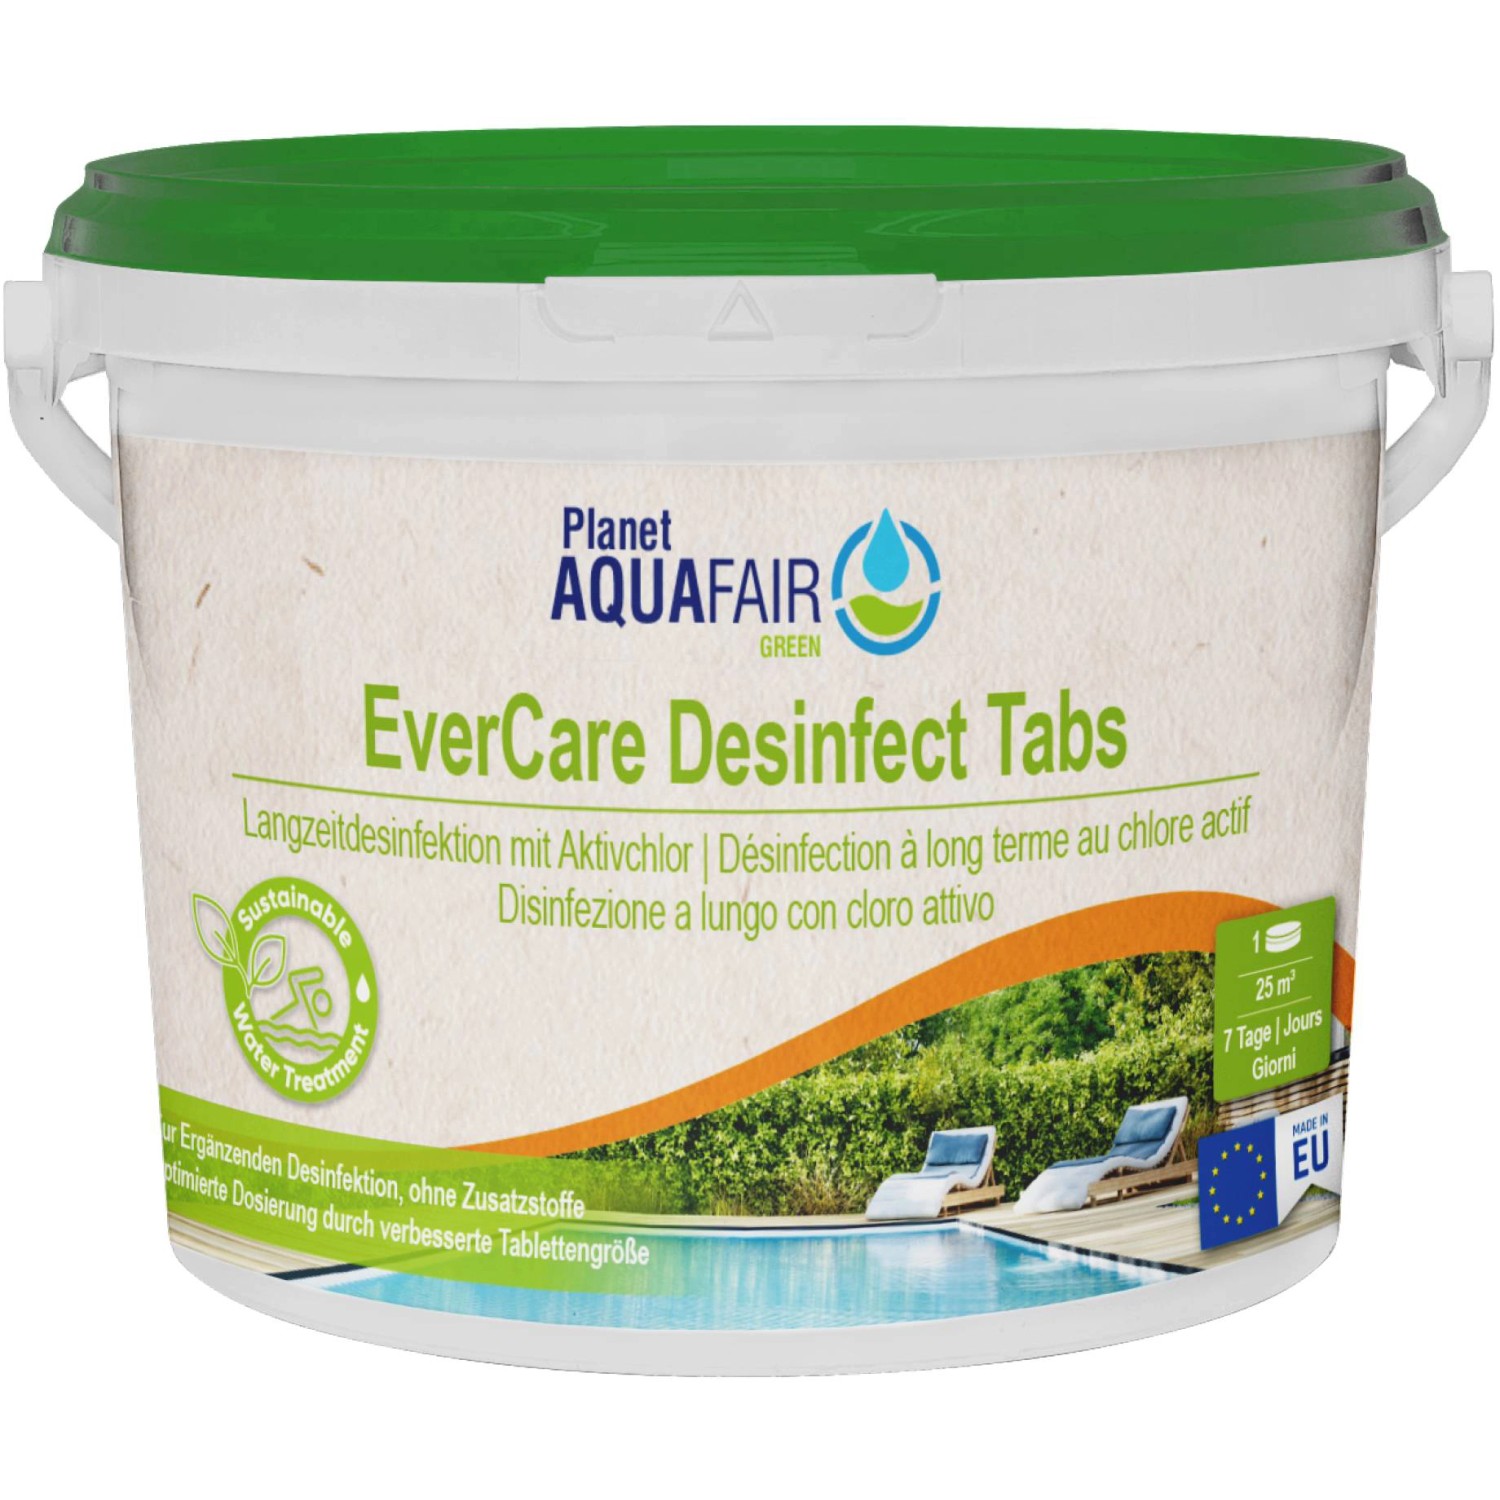 Planet Aquafair Desinfect Tabs Evercare 2,5 kg günstig online kaufen